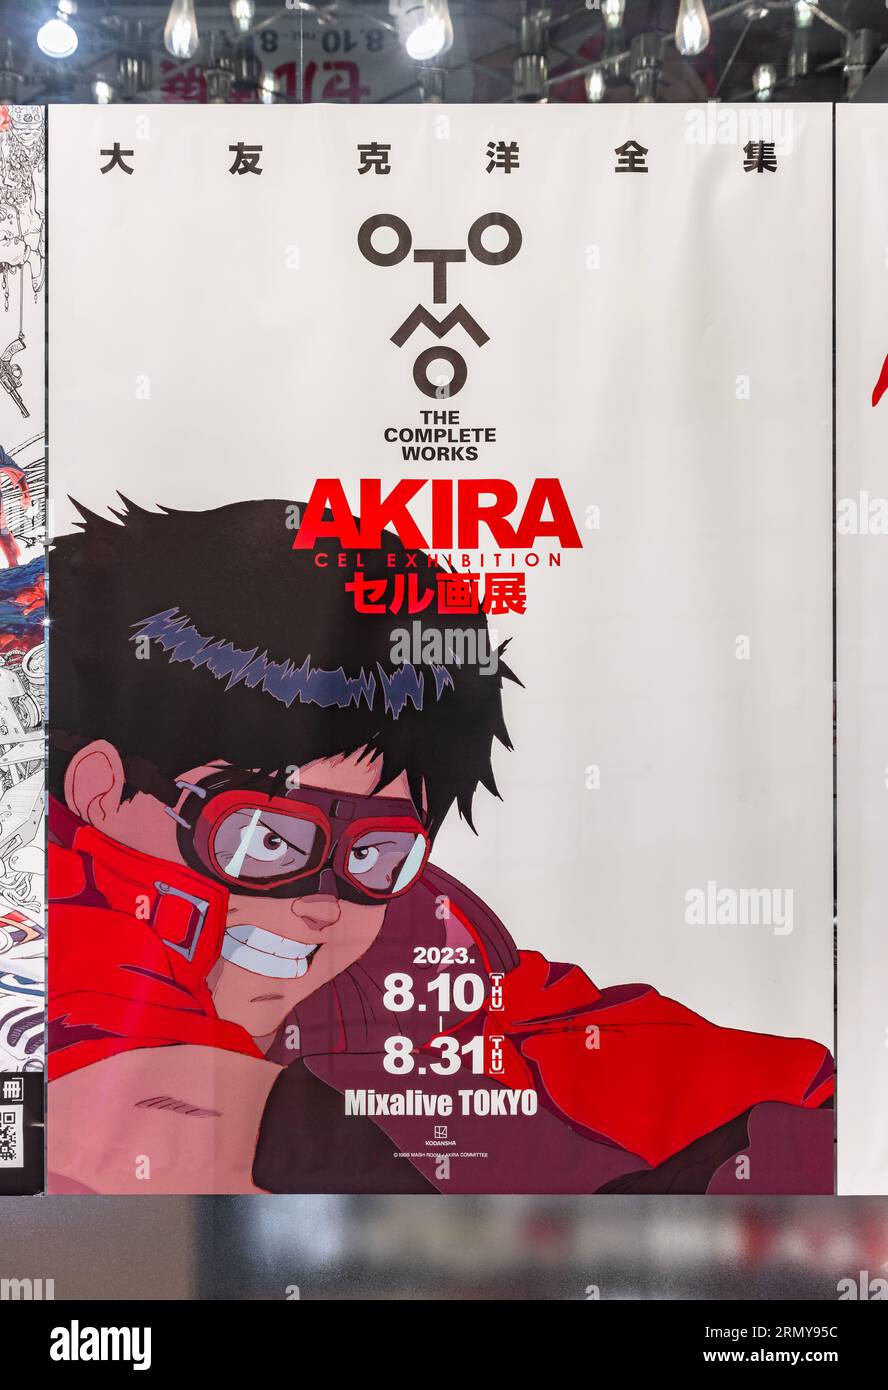 tokyo, ikebukuro - Aug 11 2023: Celluloid illustration poster of Kaneda wearing motorcycle glasses from Japanese anime and manga Akira by Katsuhiro Ōt Stock Photo